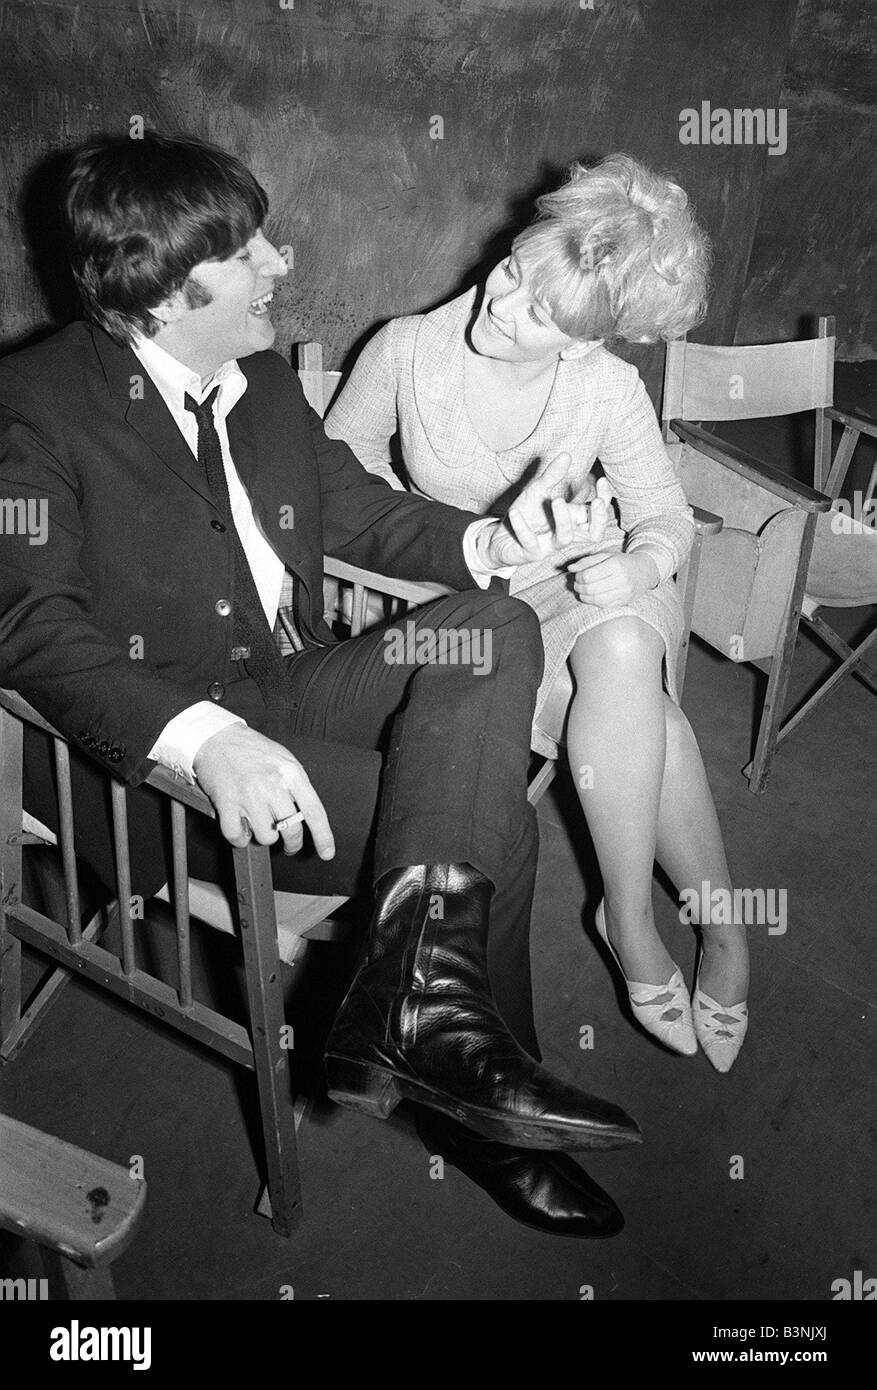 The Beatles on film set for a Hard Days Night John lennon talking to a girl on set 1964 Stock Photo